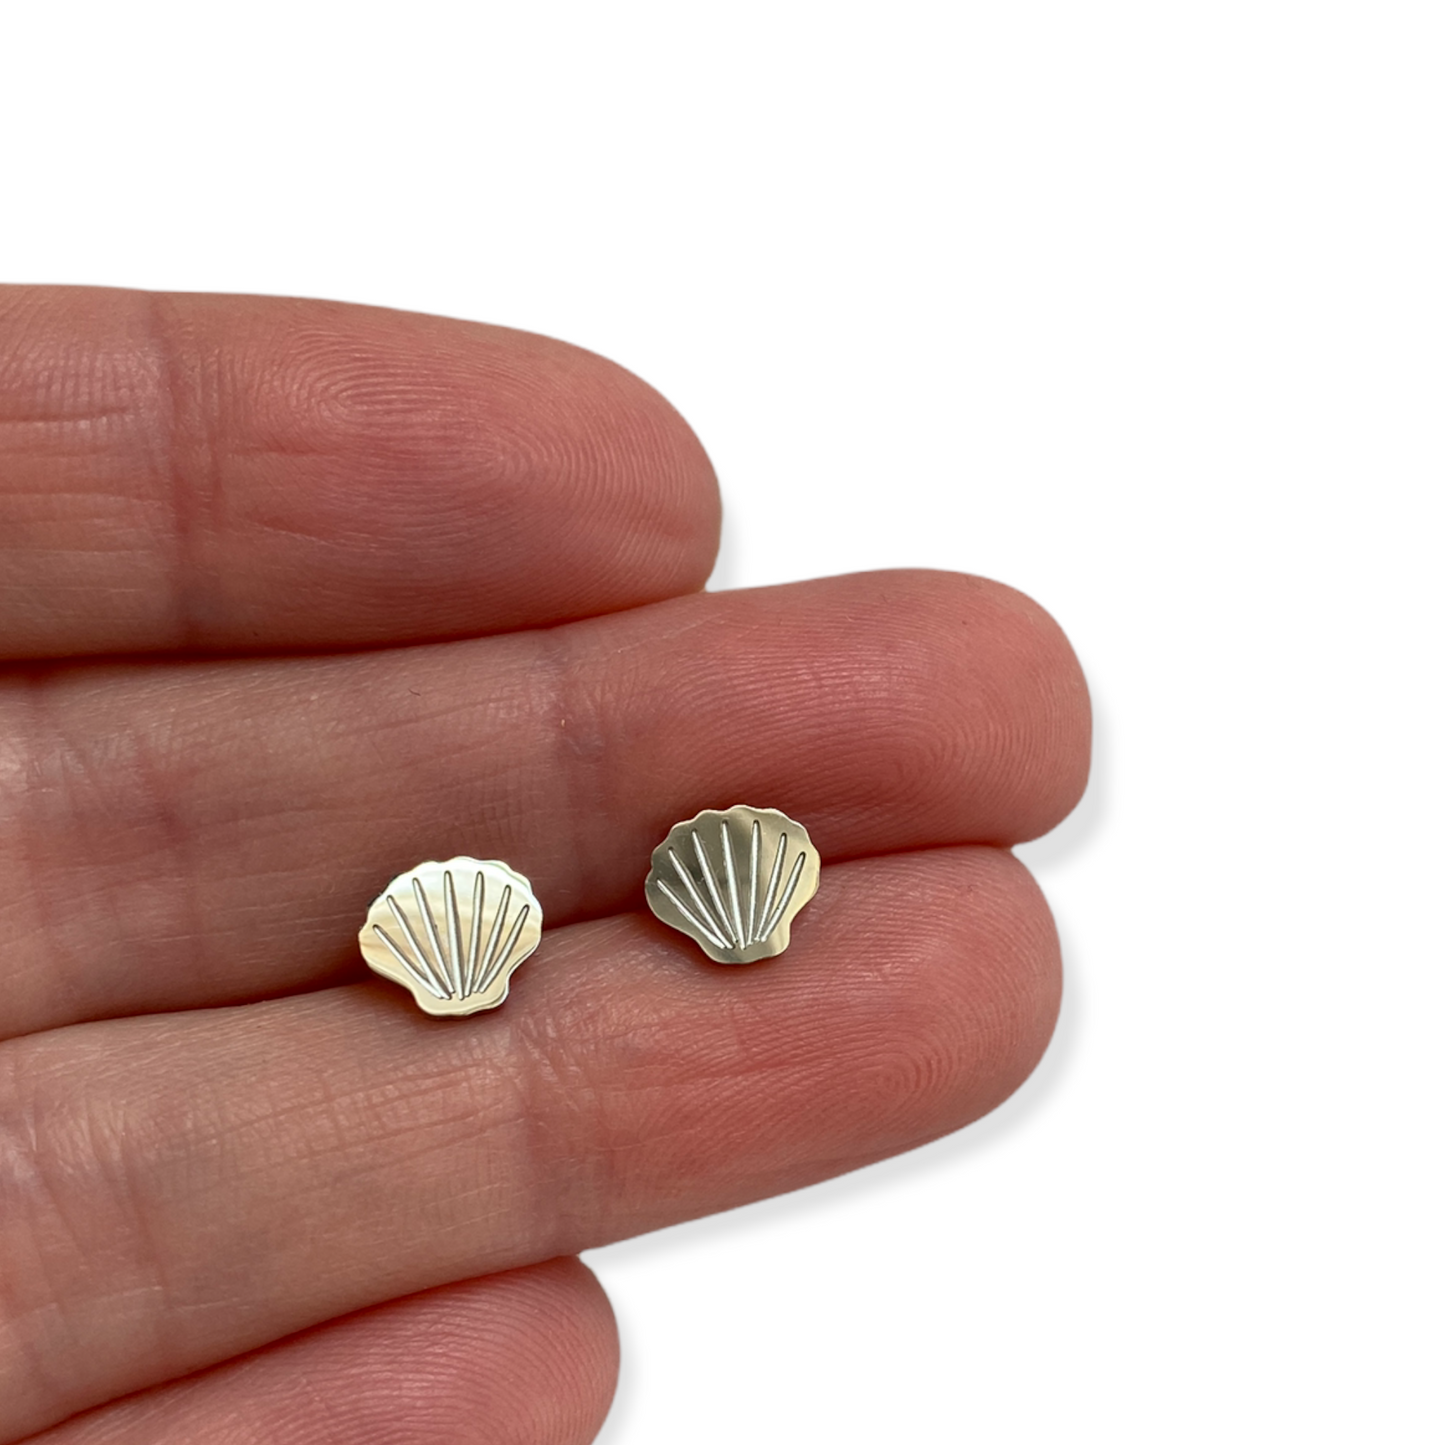 Shell Earring Studs Silver